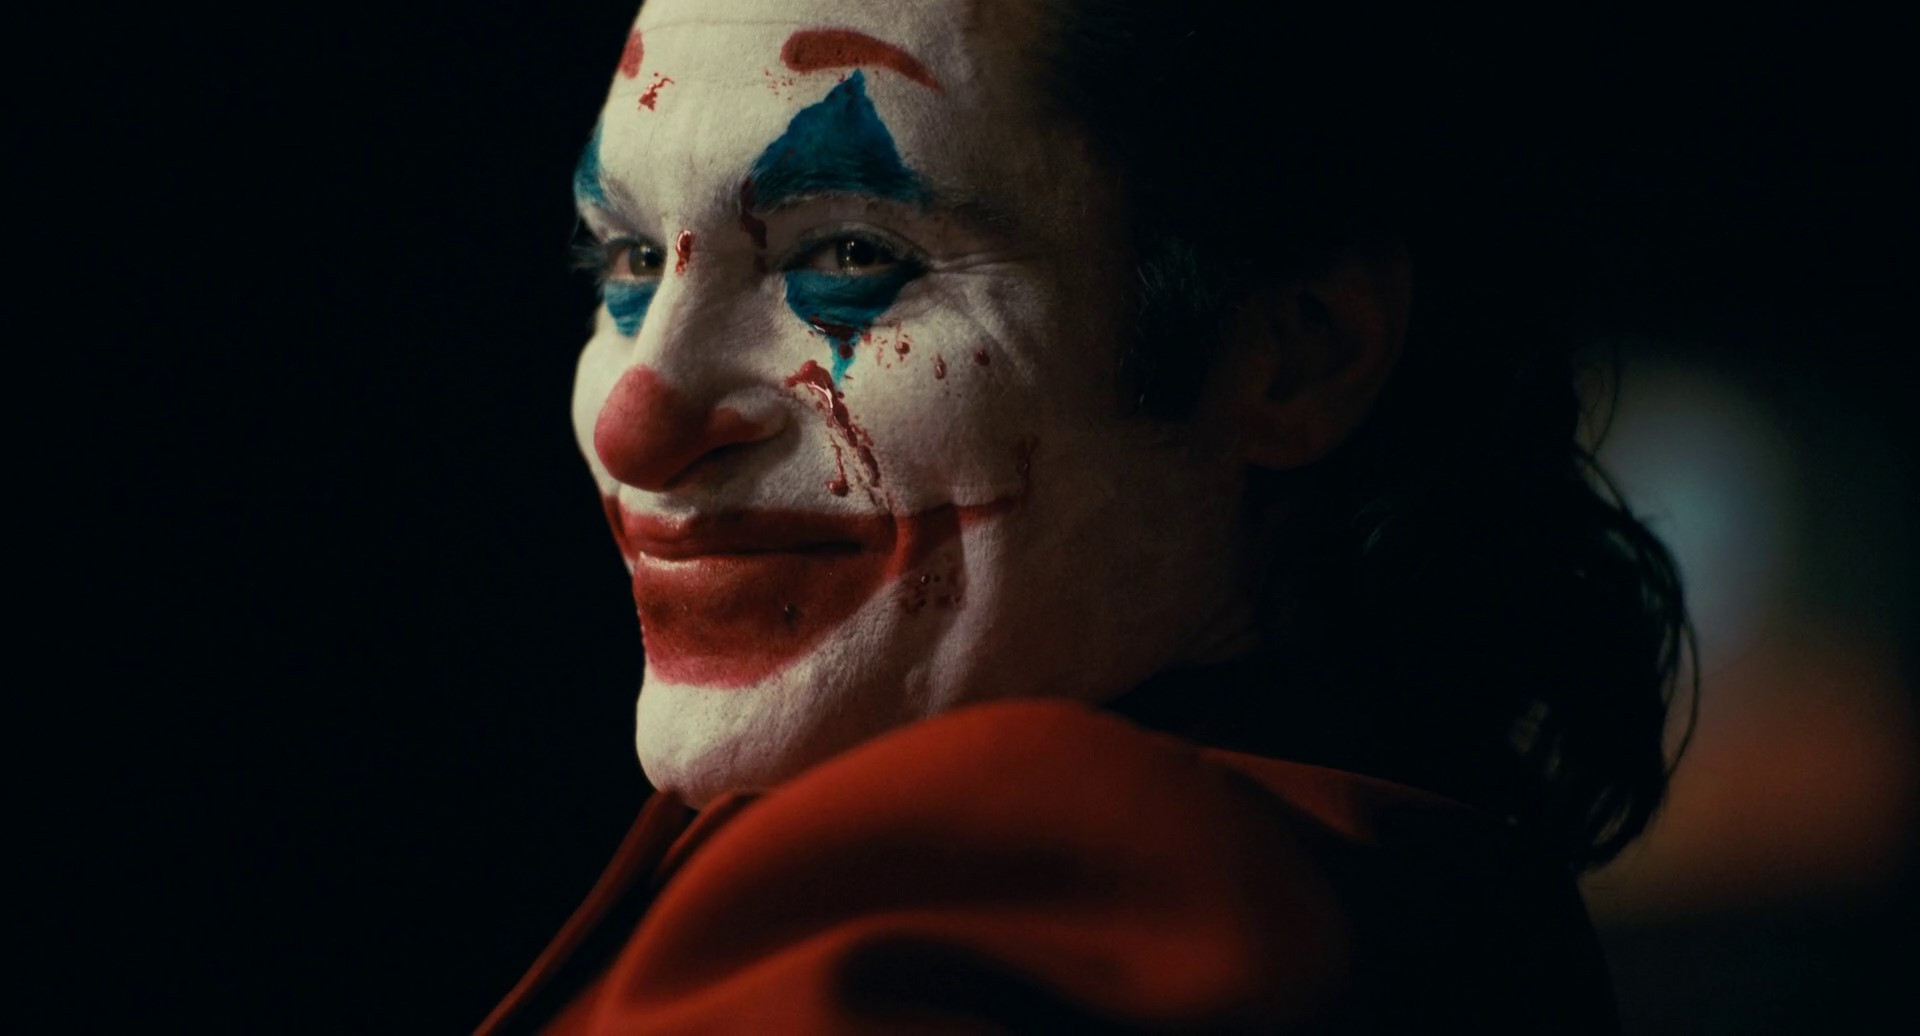 People 1920x1036 Joker (2019 Movie) Joker Joaquin Phoenix men movies film stills makeup depth of field blood smiling